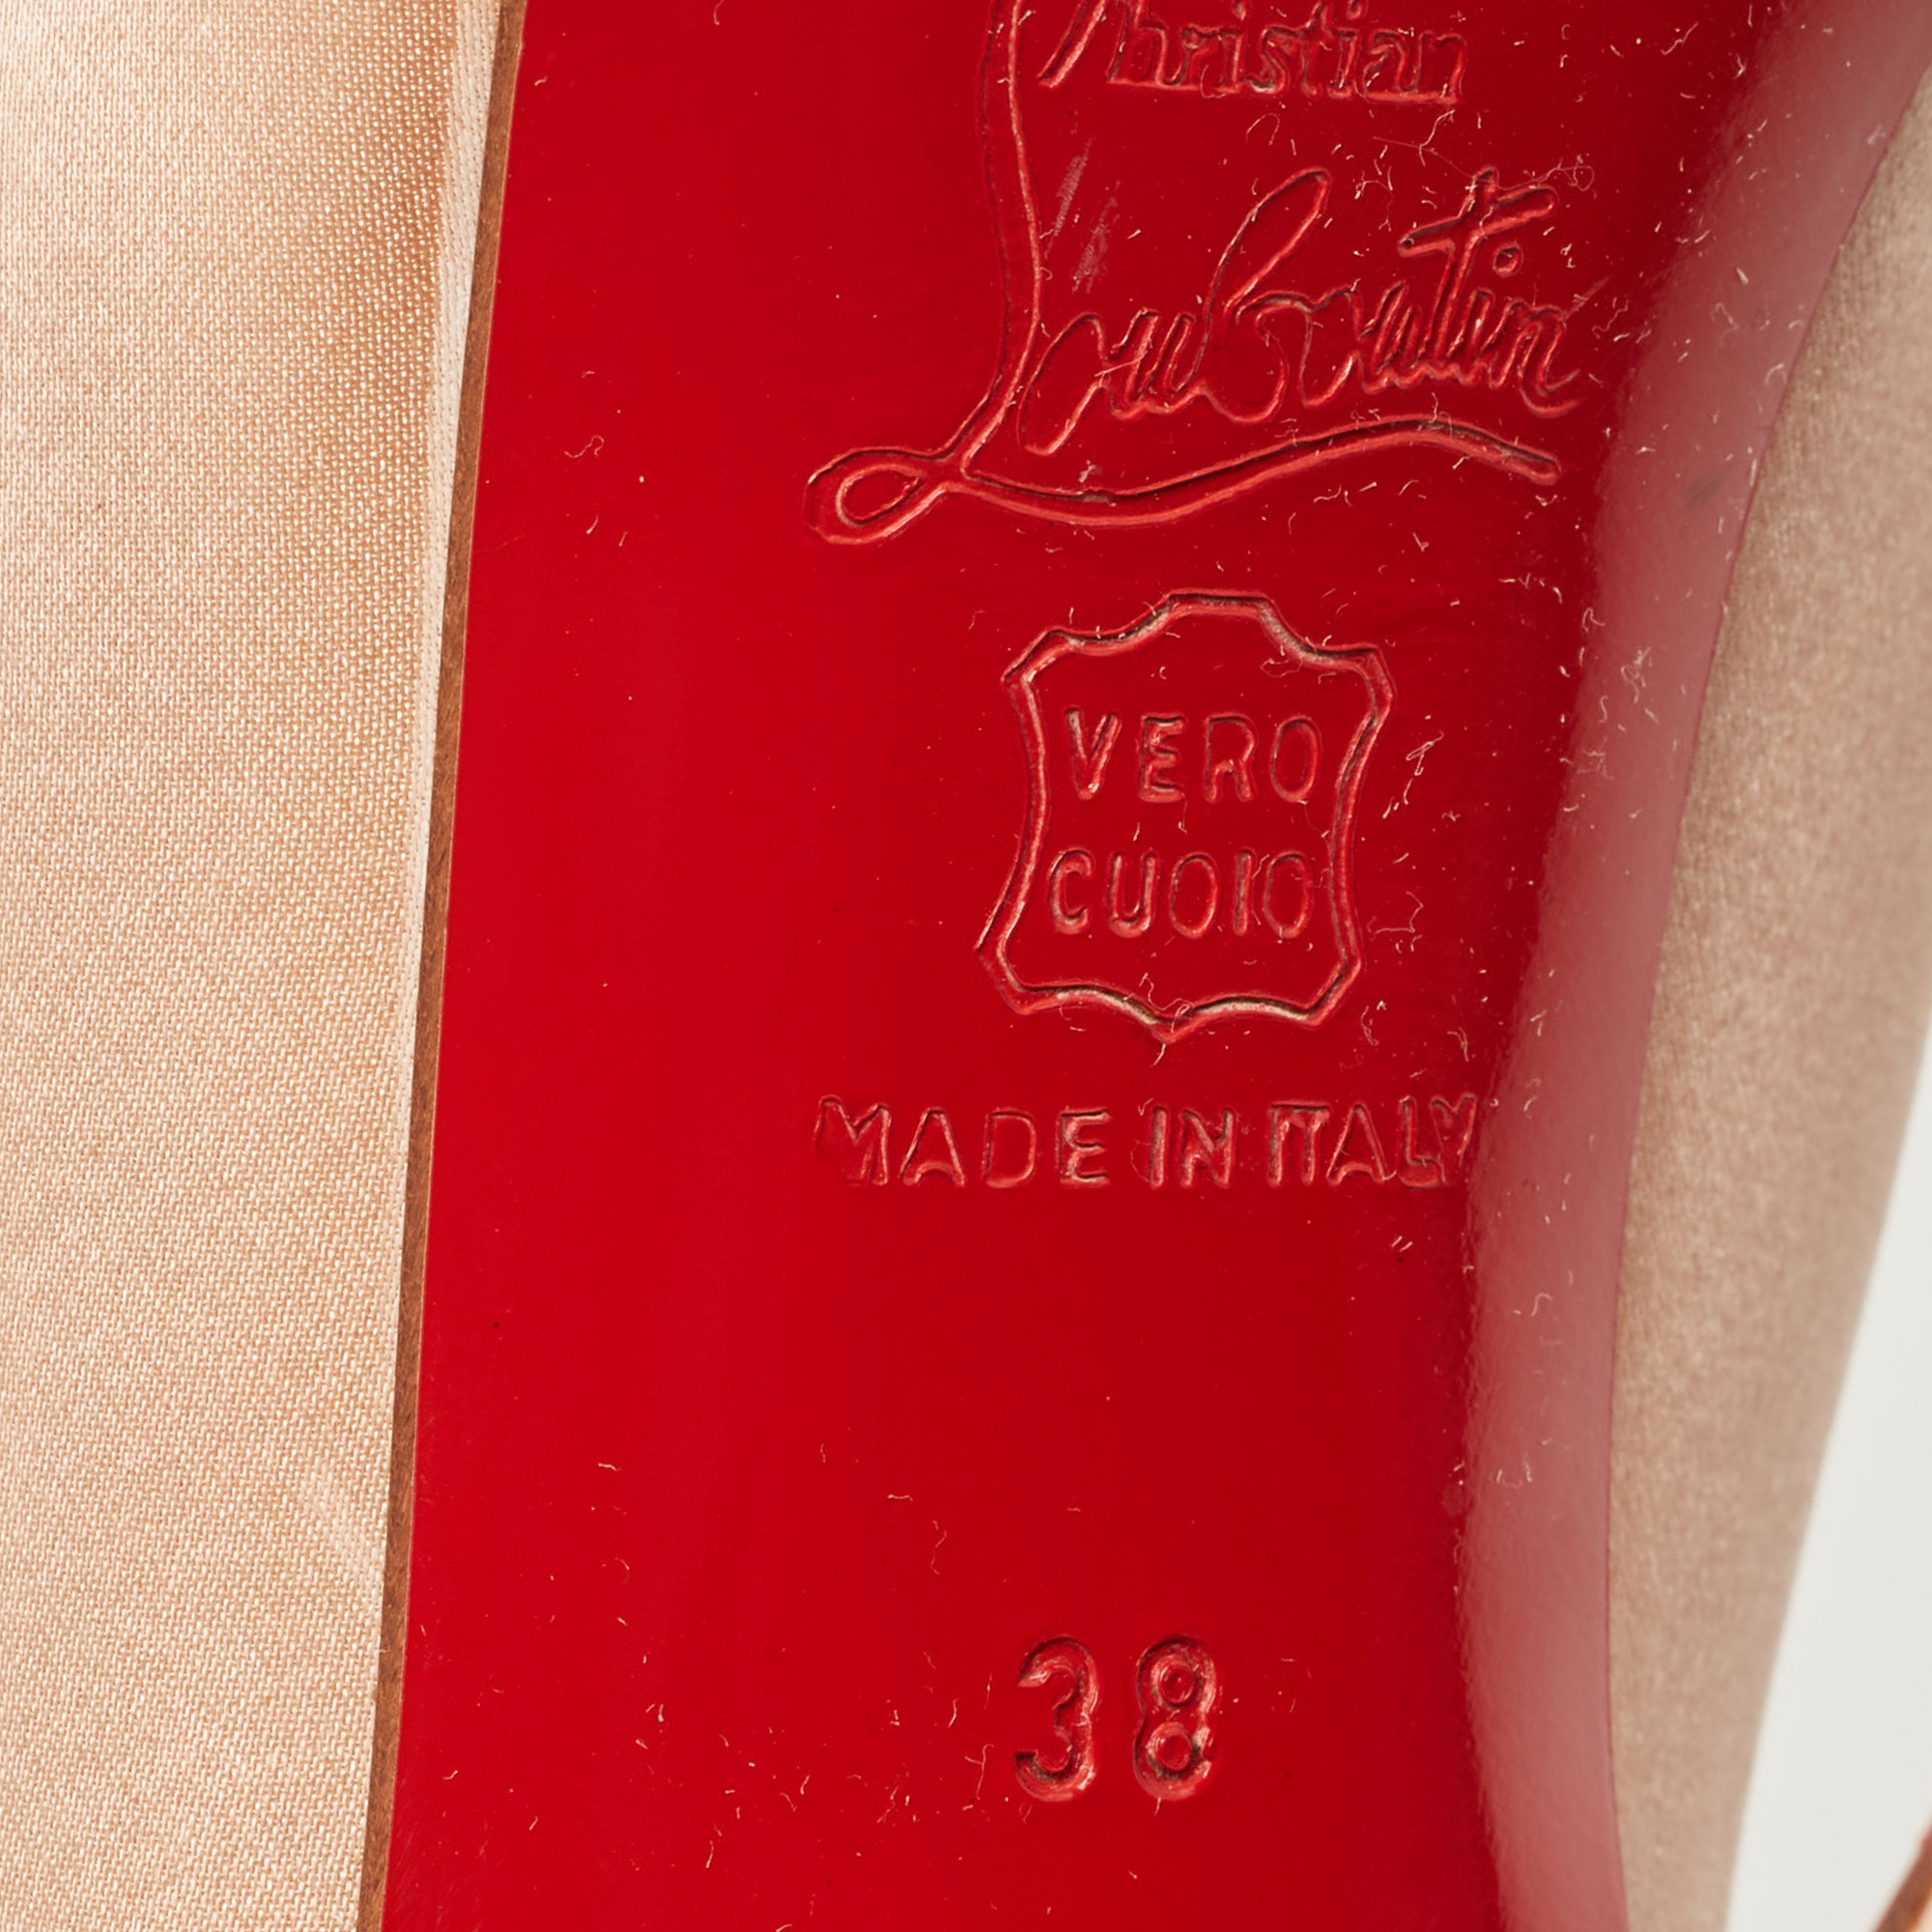 Christian Louboutin Pink Satin Open Toe Platform Slingback Sandals Size 38